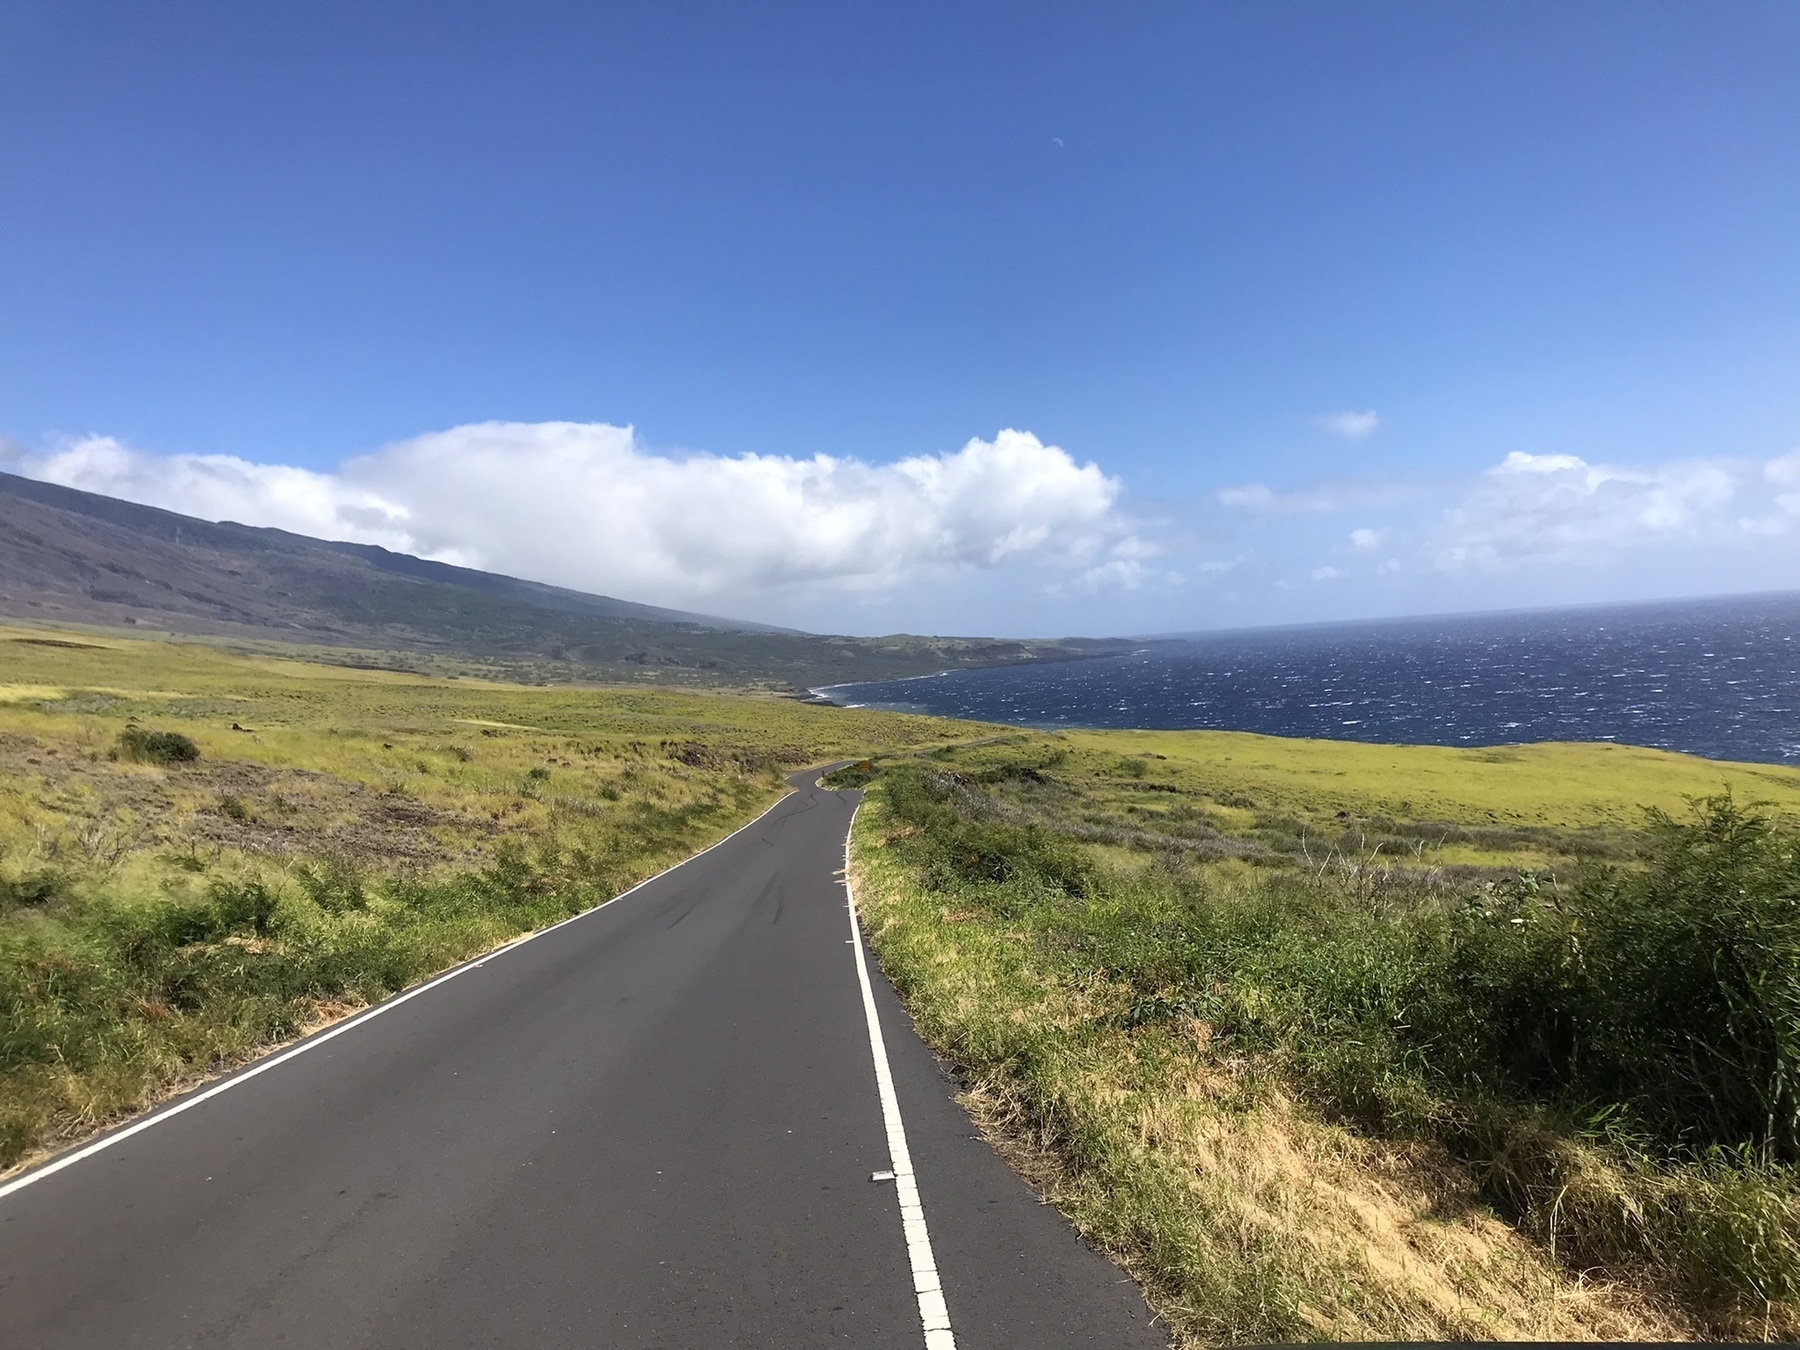 The road on Haleakala’s south flanks on Maui, looking towards Kaupo